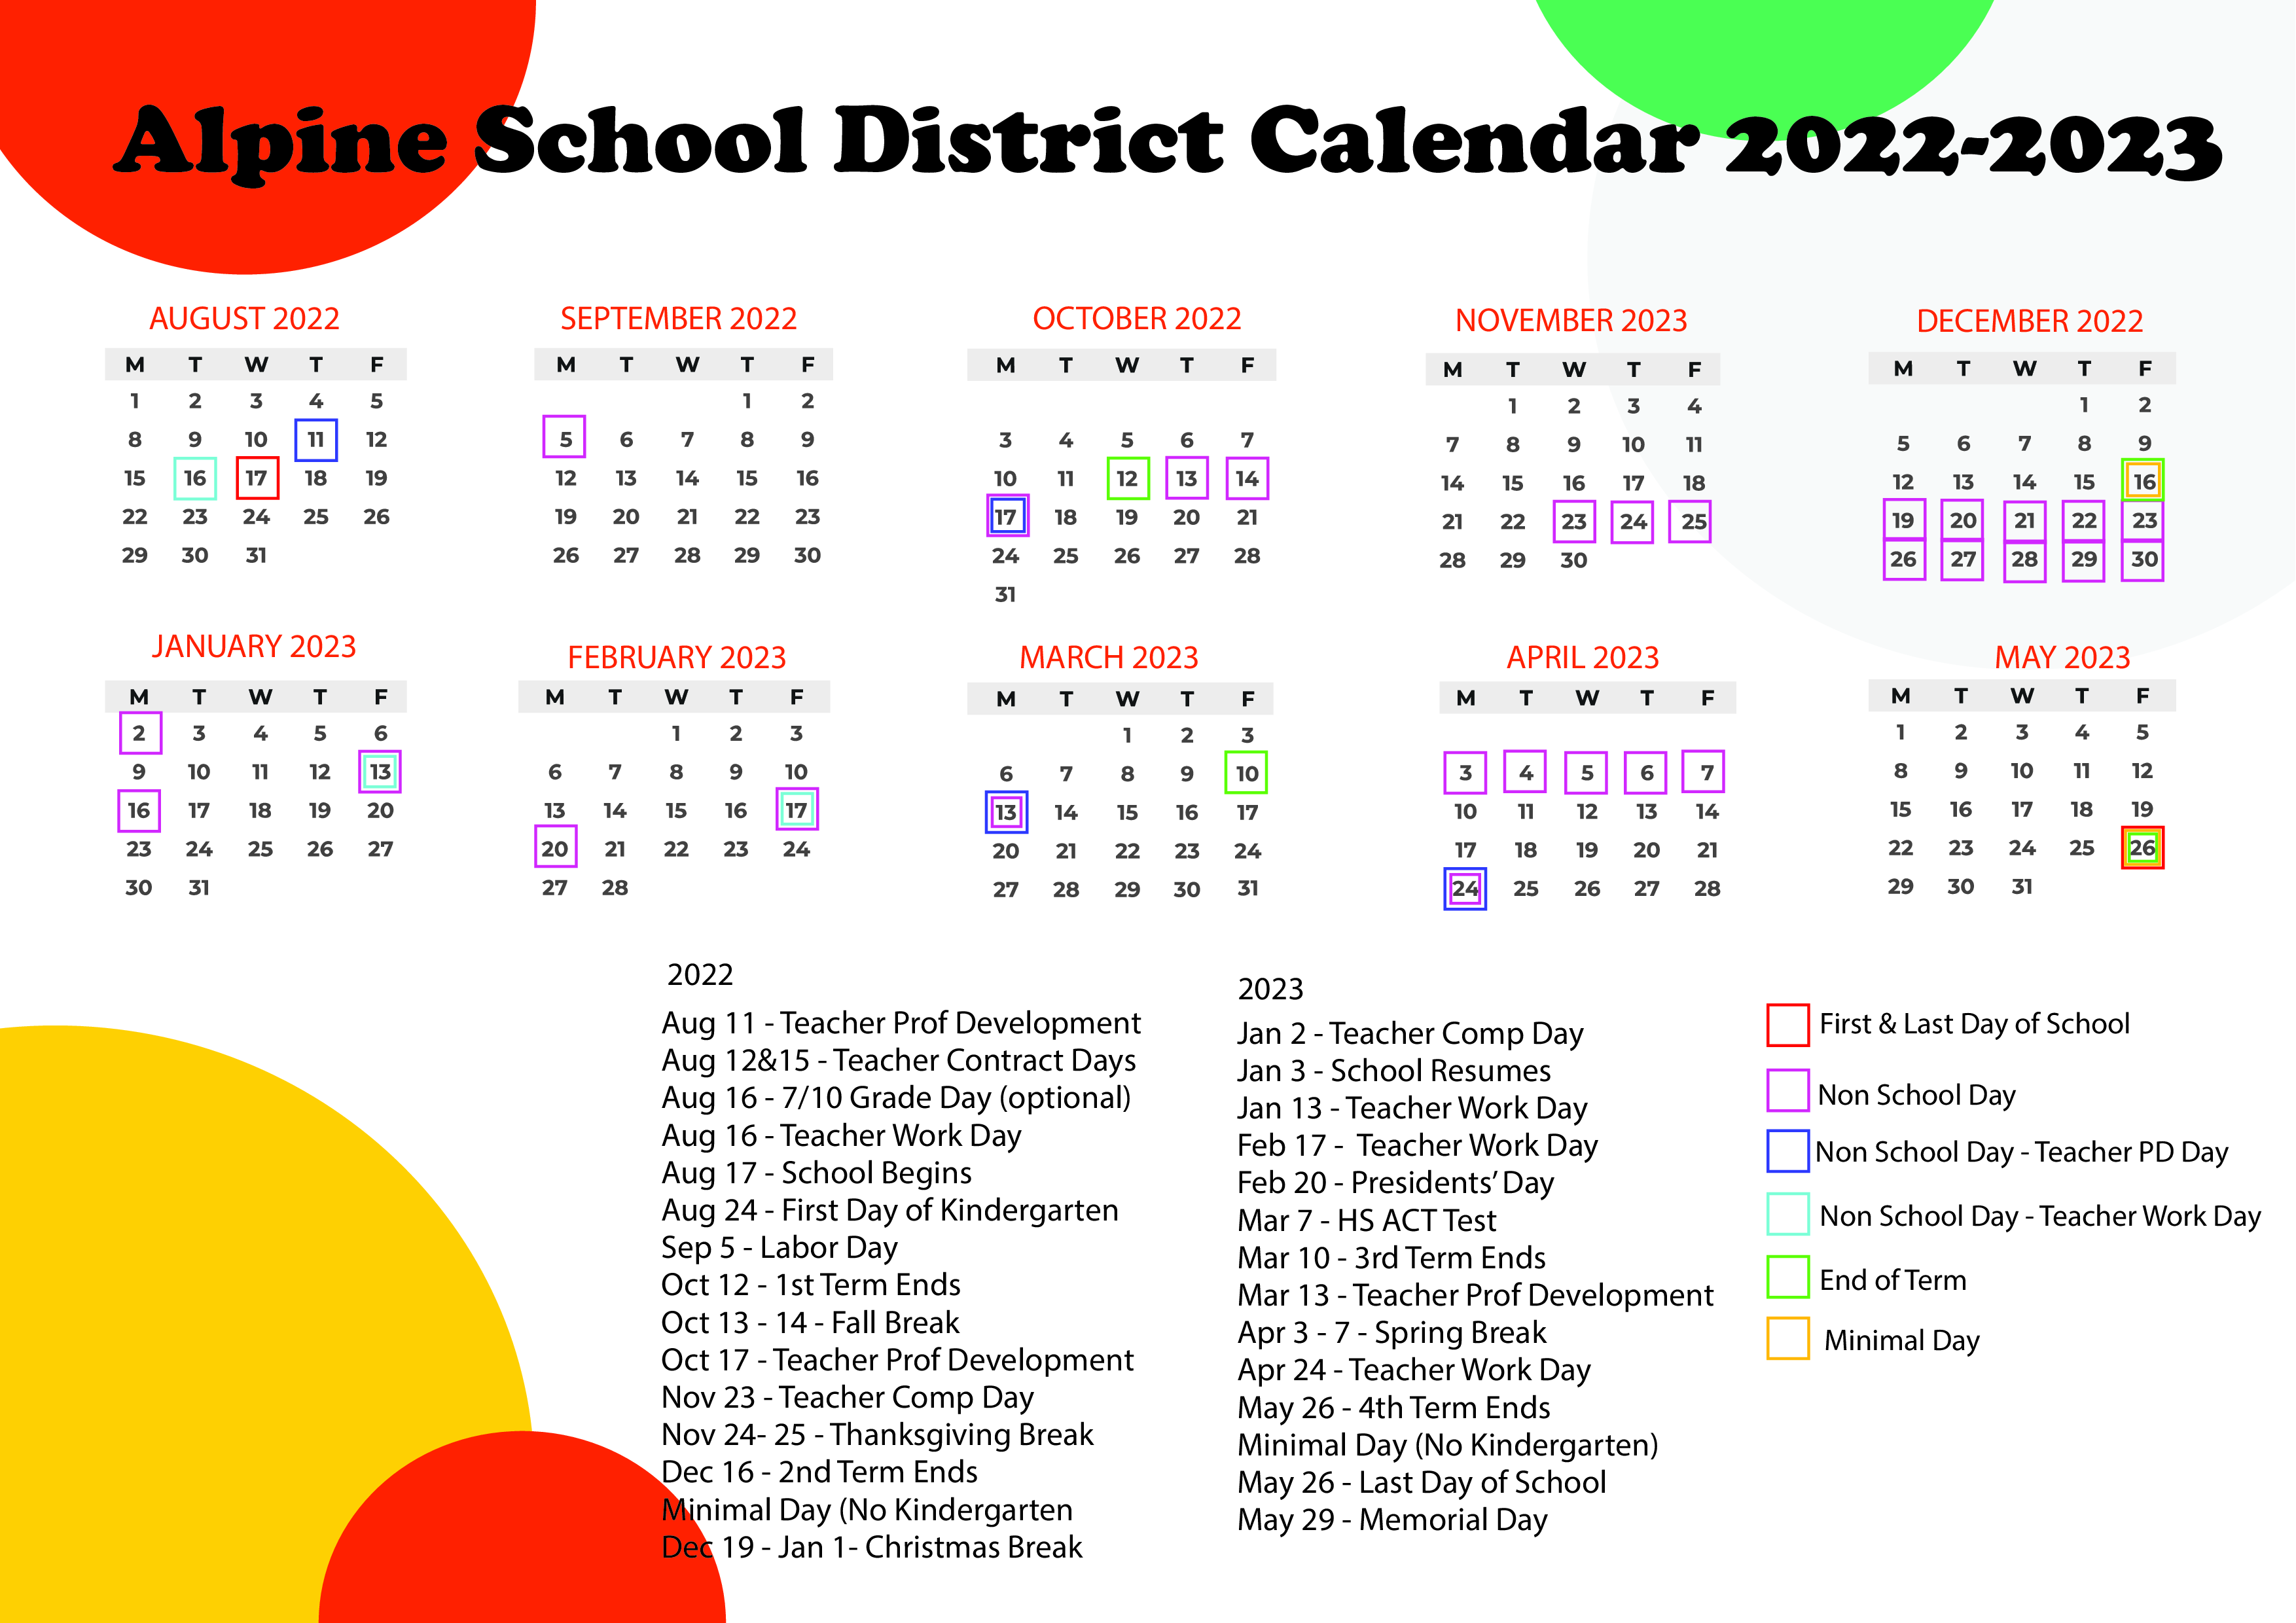 Alpine School District Calendar with Holidays 2022-2023